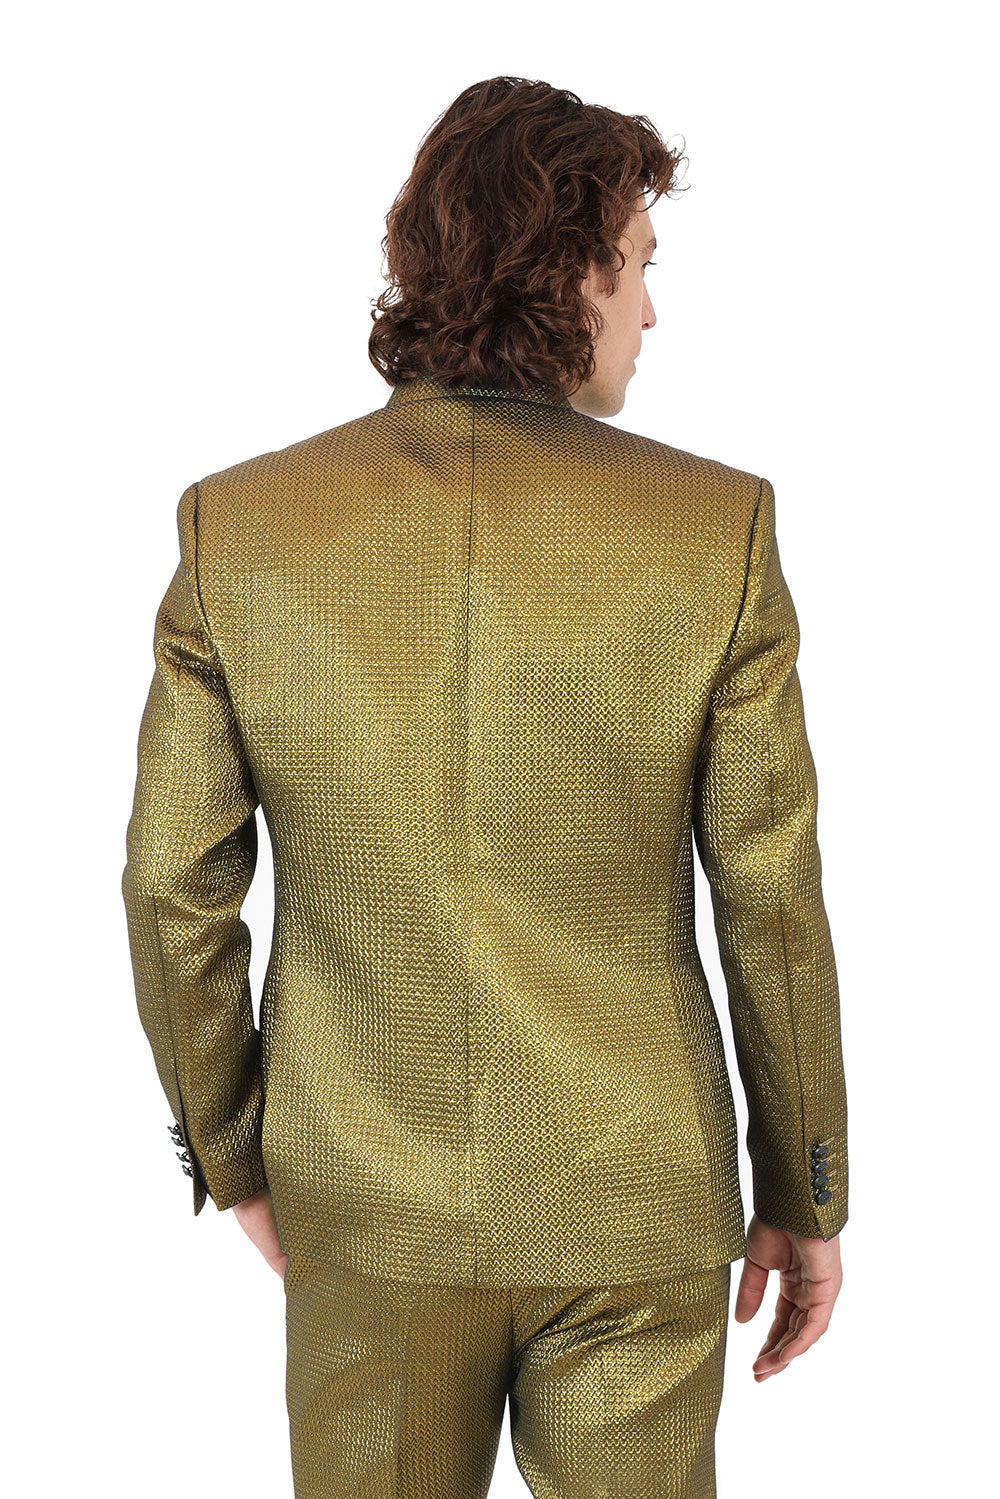 Barabas Men's Stand Collar Shiny Textured Material Blazer 2BL3105 Gold 